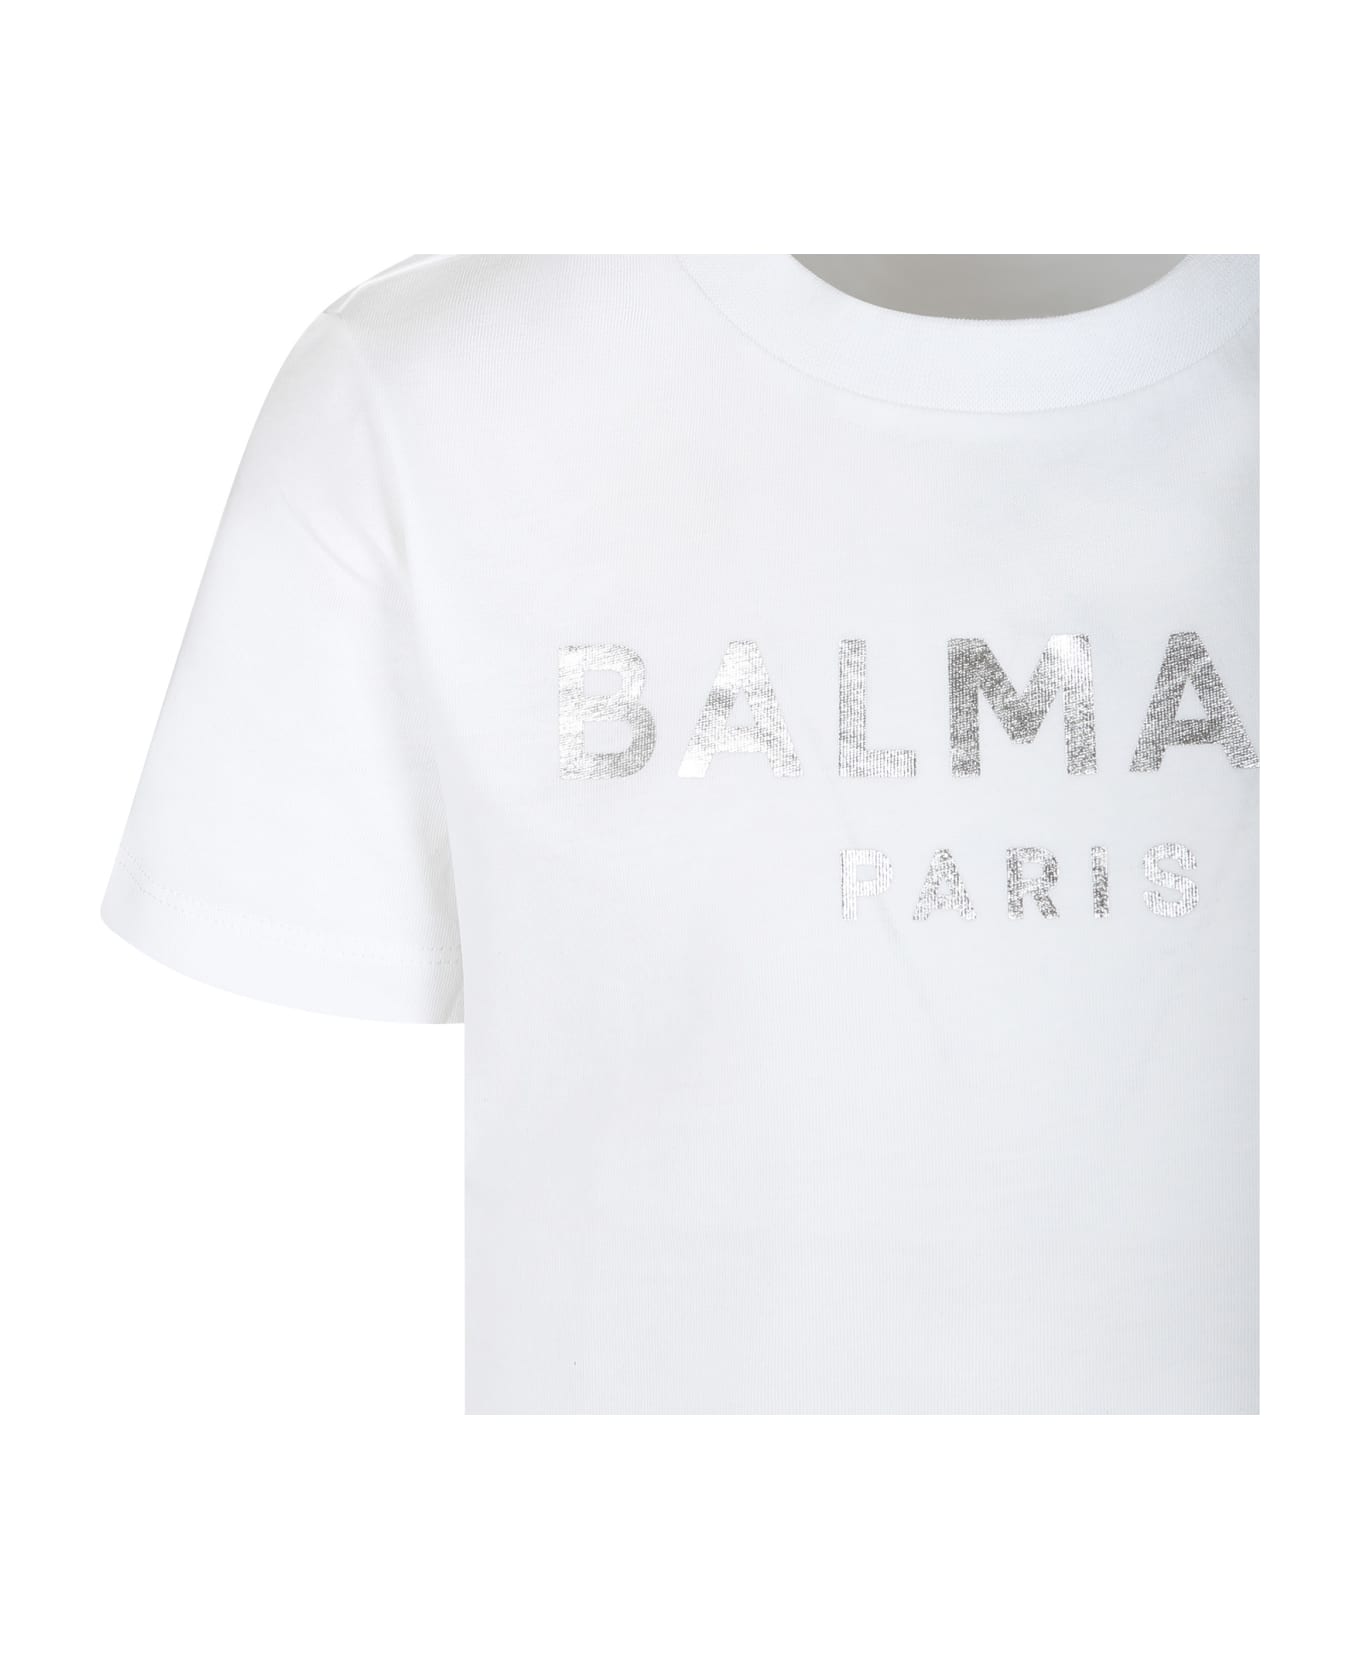 Balmain White T-shirt For Boy With Logo - White Tシャツ＆ポロシャツ